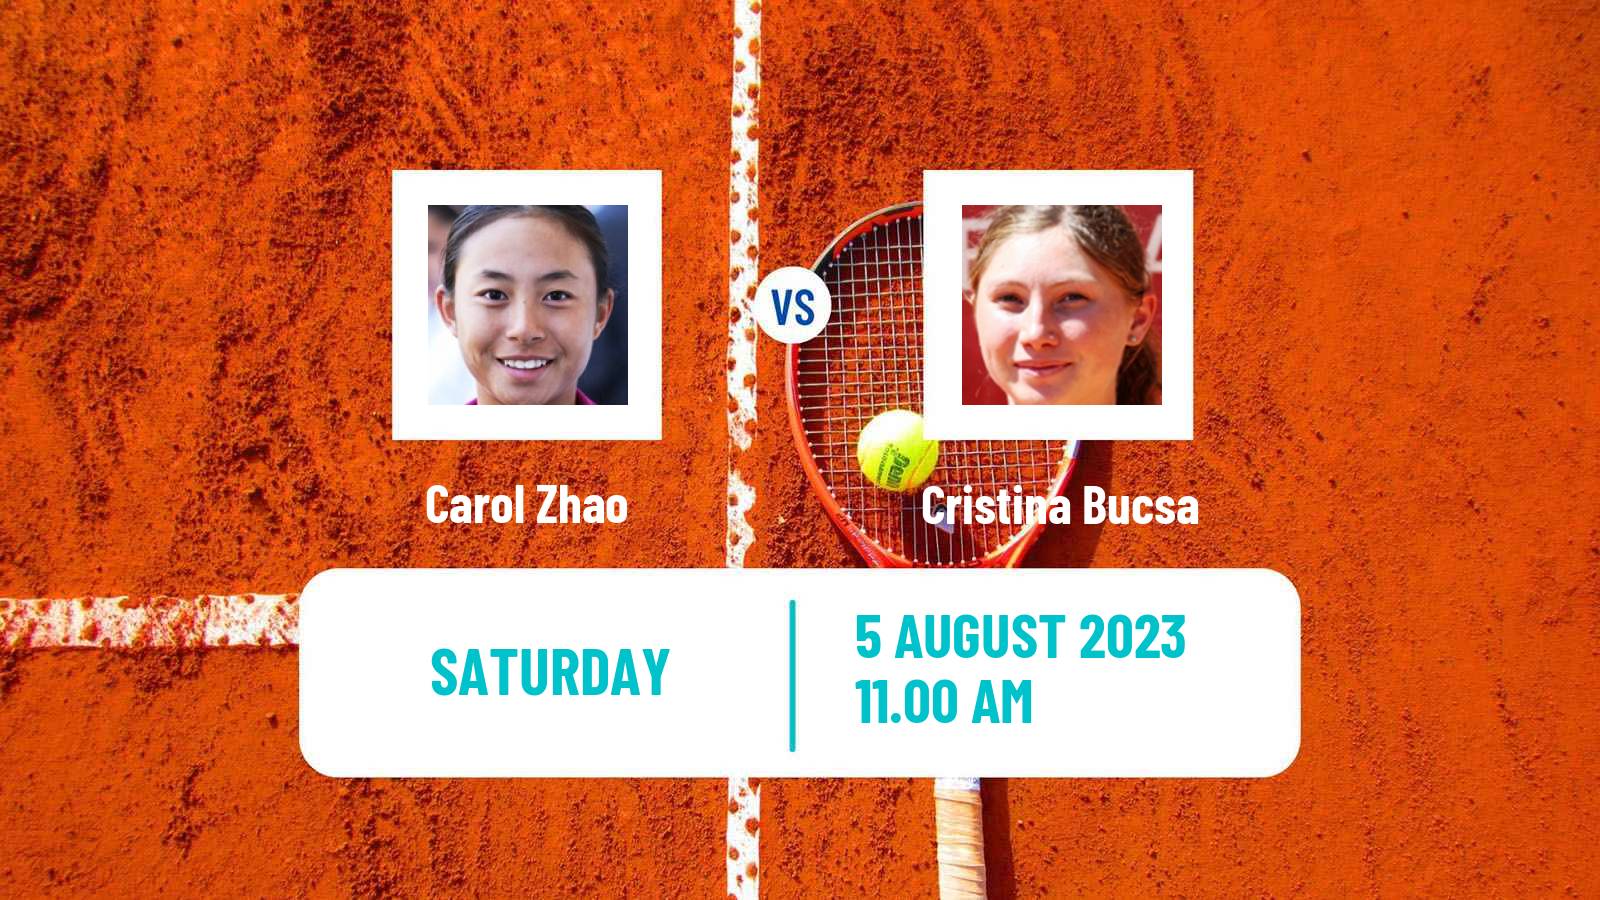 Tennis WTA Montreal Carol Zhao - Cristina Bucsa